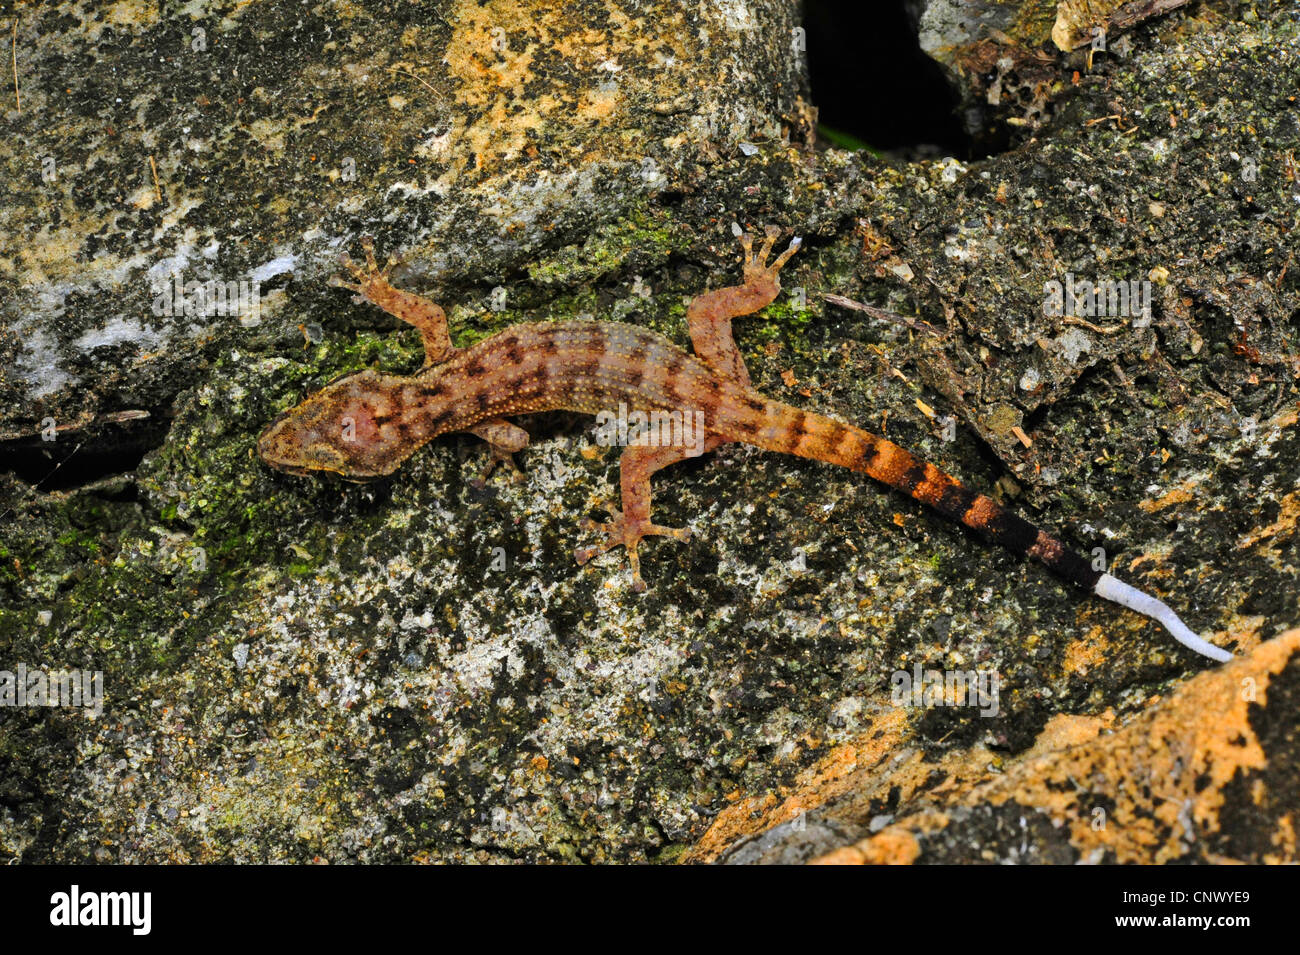 Honduras Leaf-toed Gecko   (Phyllodactylus palmeus), sitting at a tree trunk, Honduras, Roatan Stock Photo